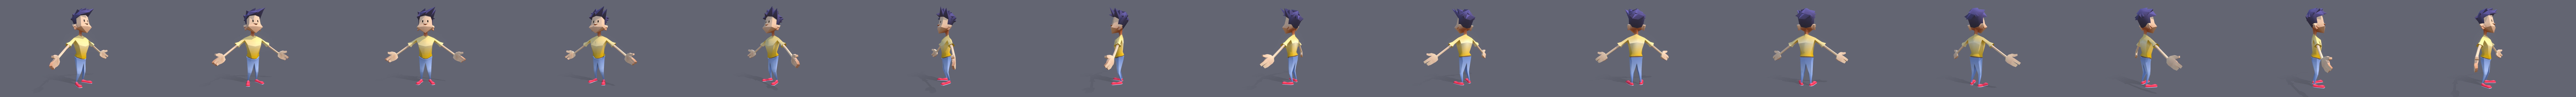 Sprite-character 3D models - Sketchfab